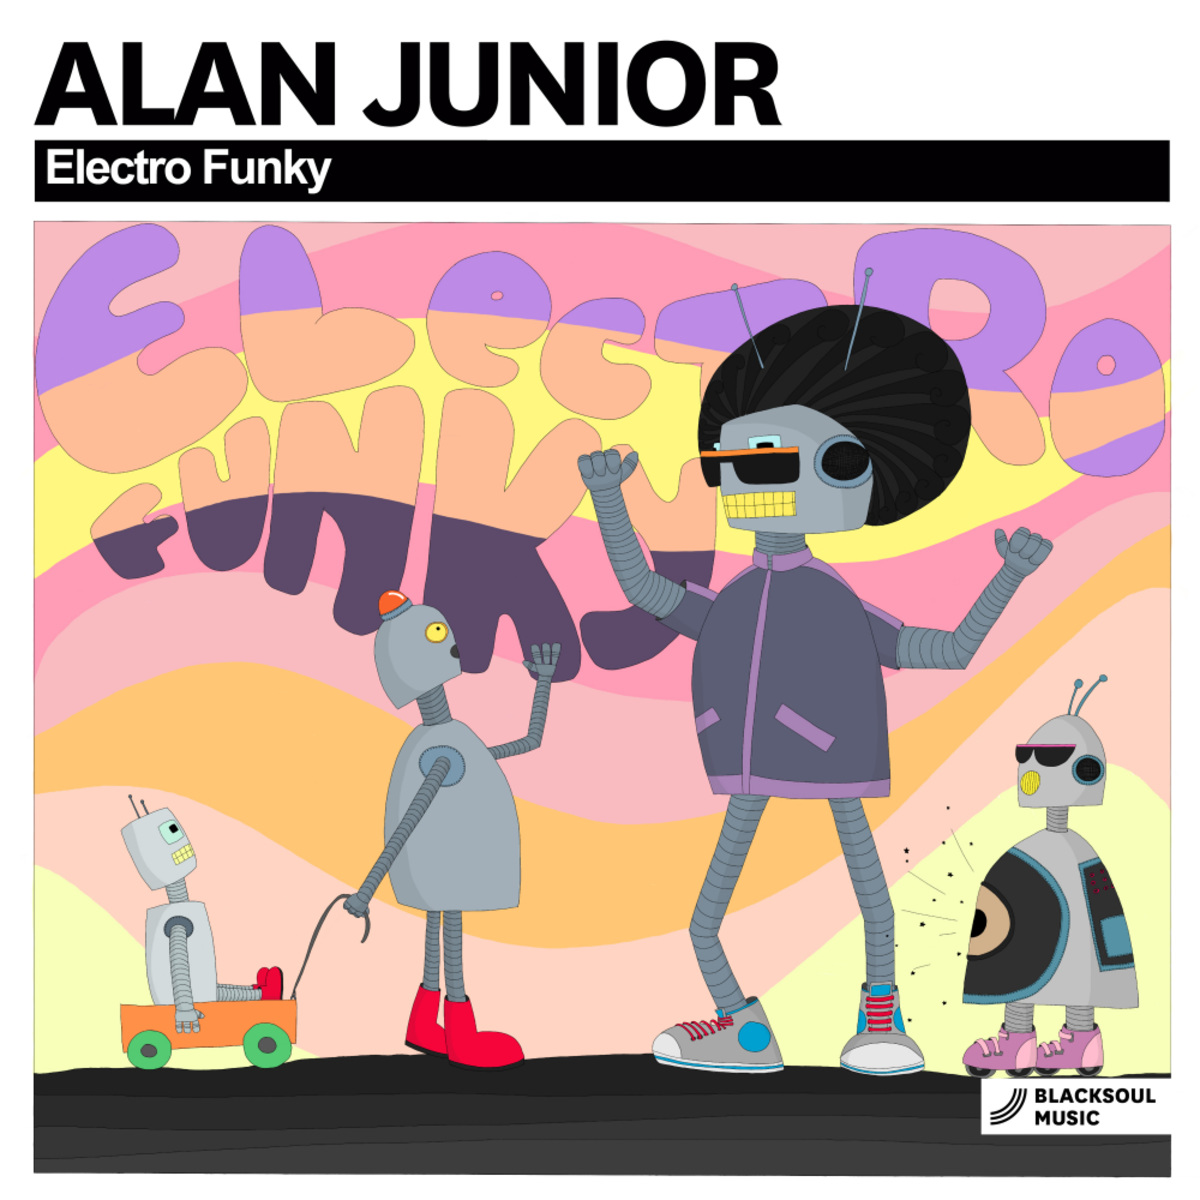 Alan Junior - Electro Funky / Blacksoul Music